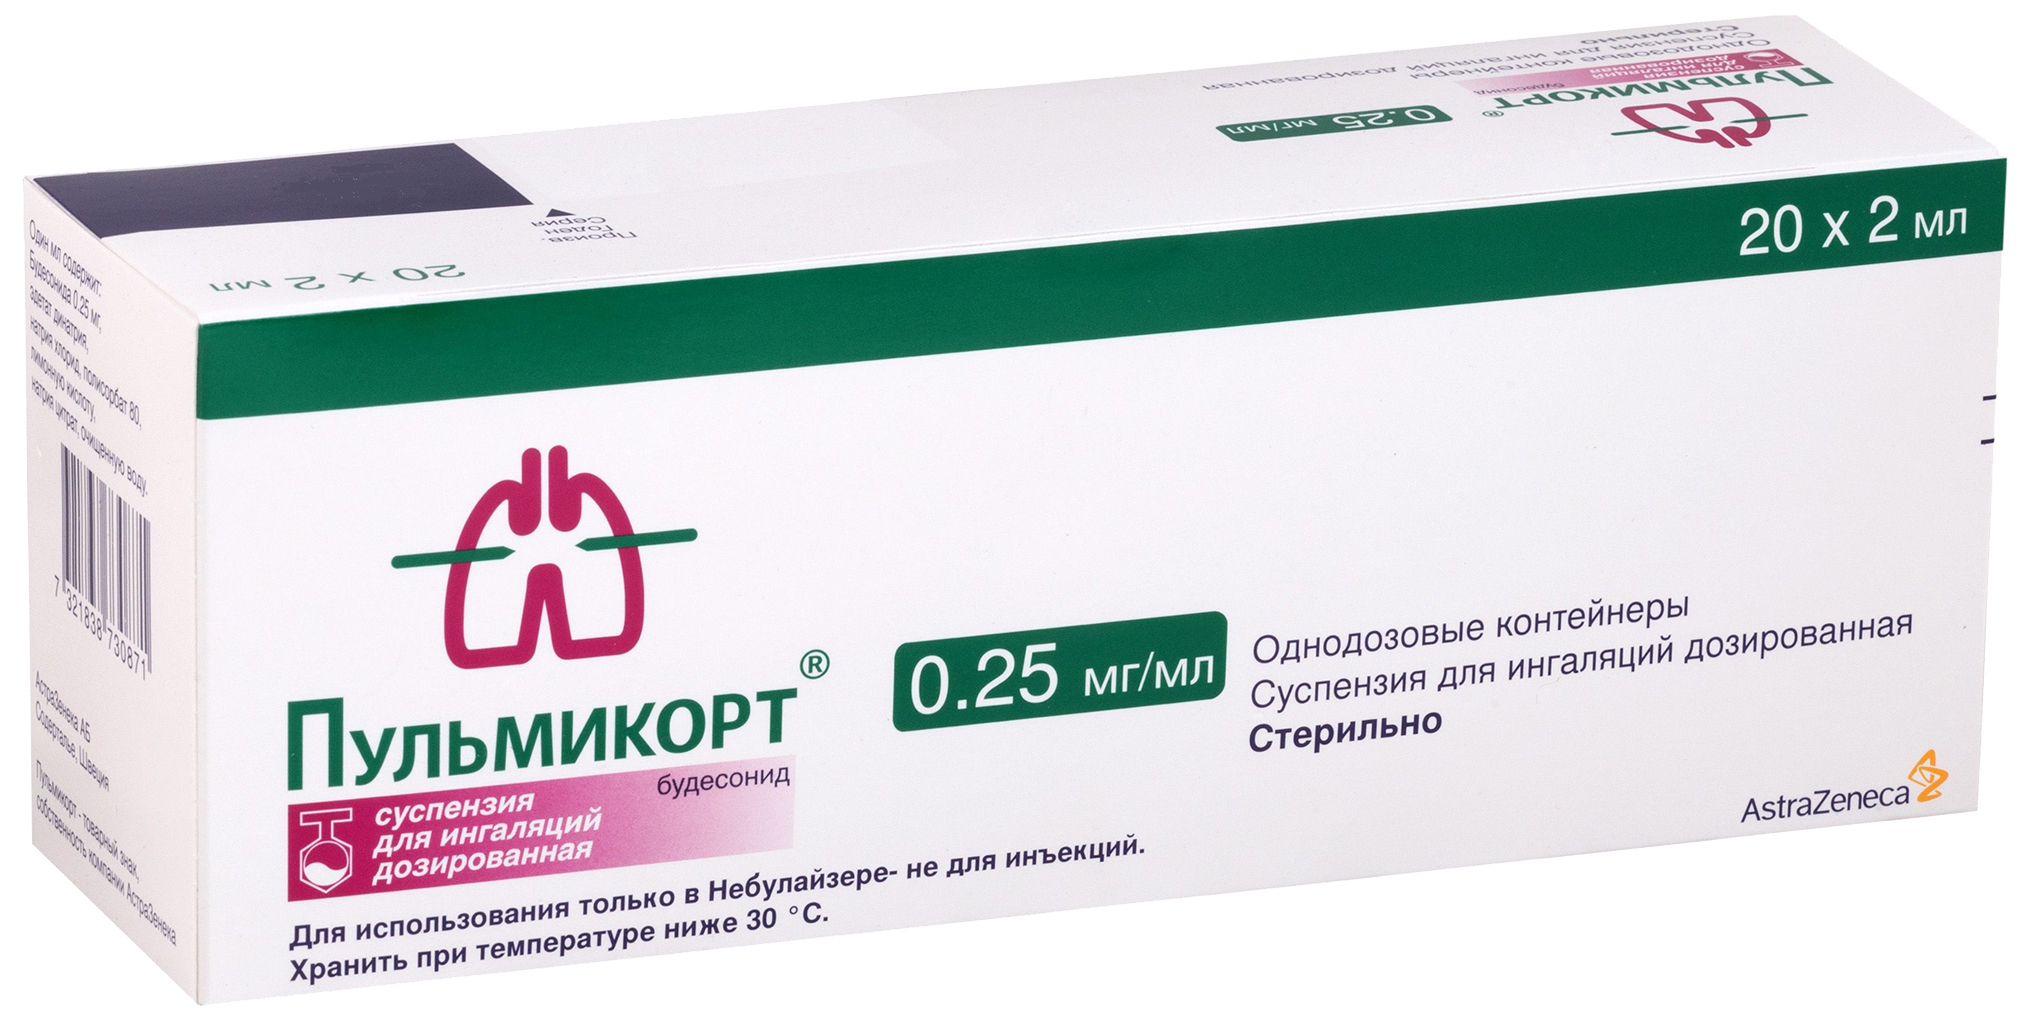 Купить Пульмикорт сусп. для инг.доз.0, 25 мг/мл контейнер 2 мл №20, AstraZeneca AB